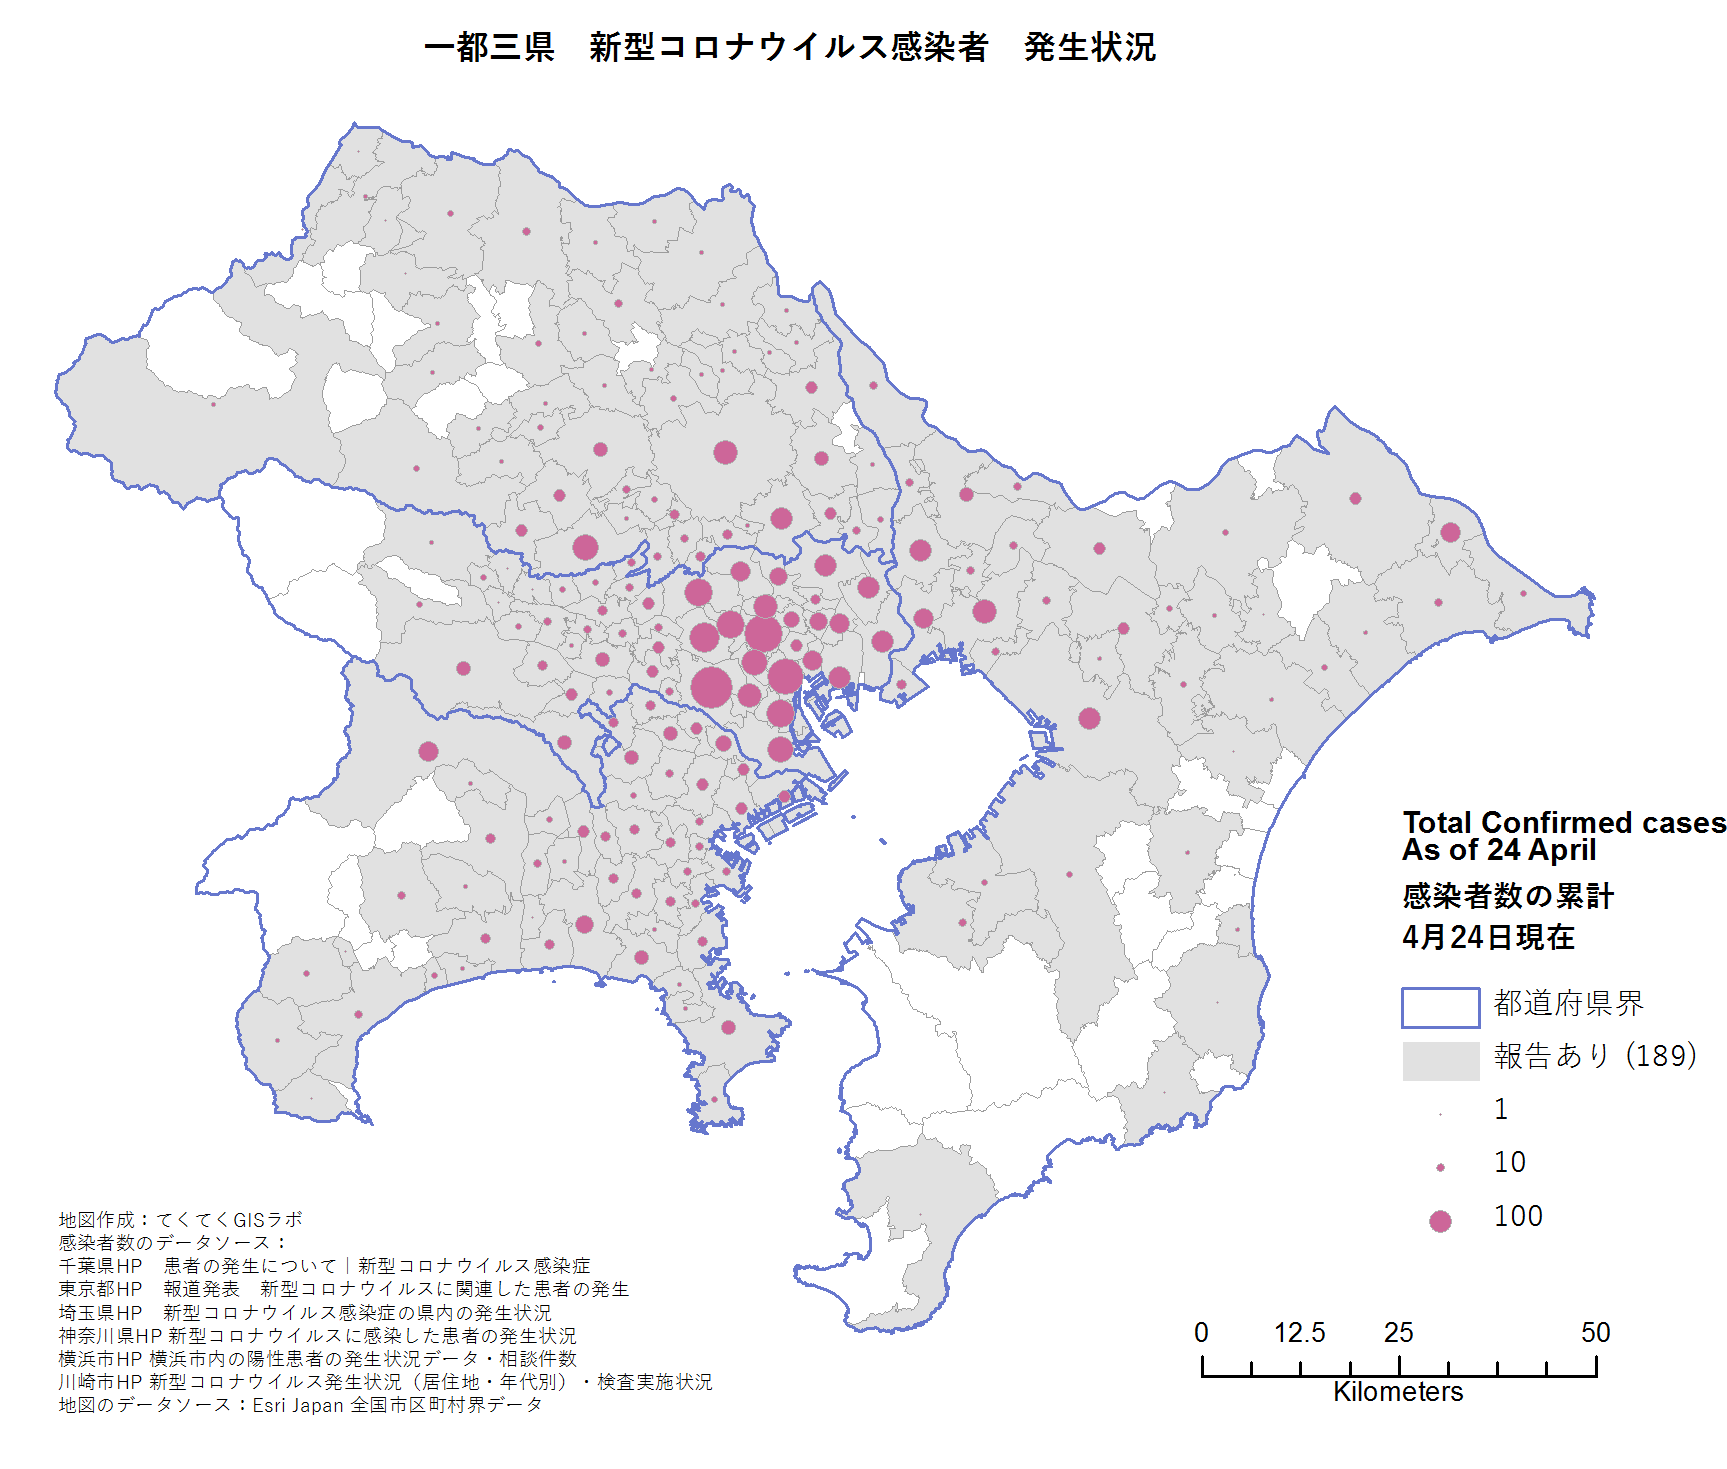 Number of cases around Tokyo